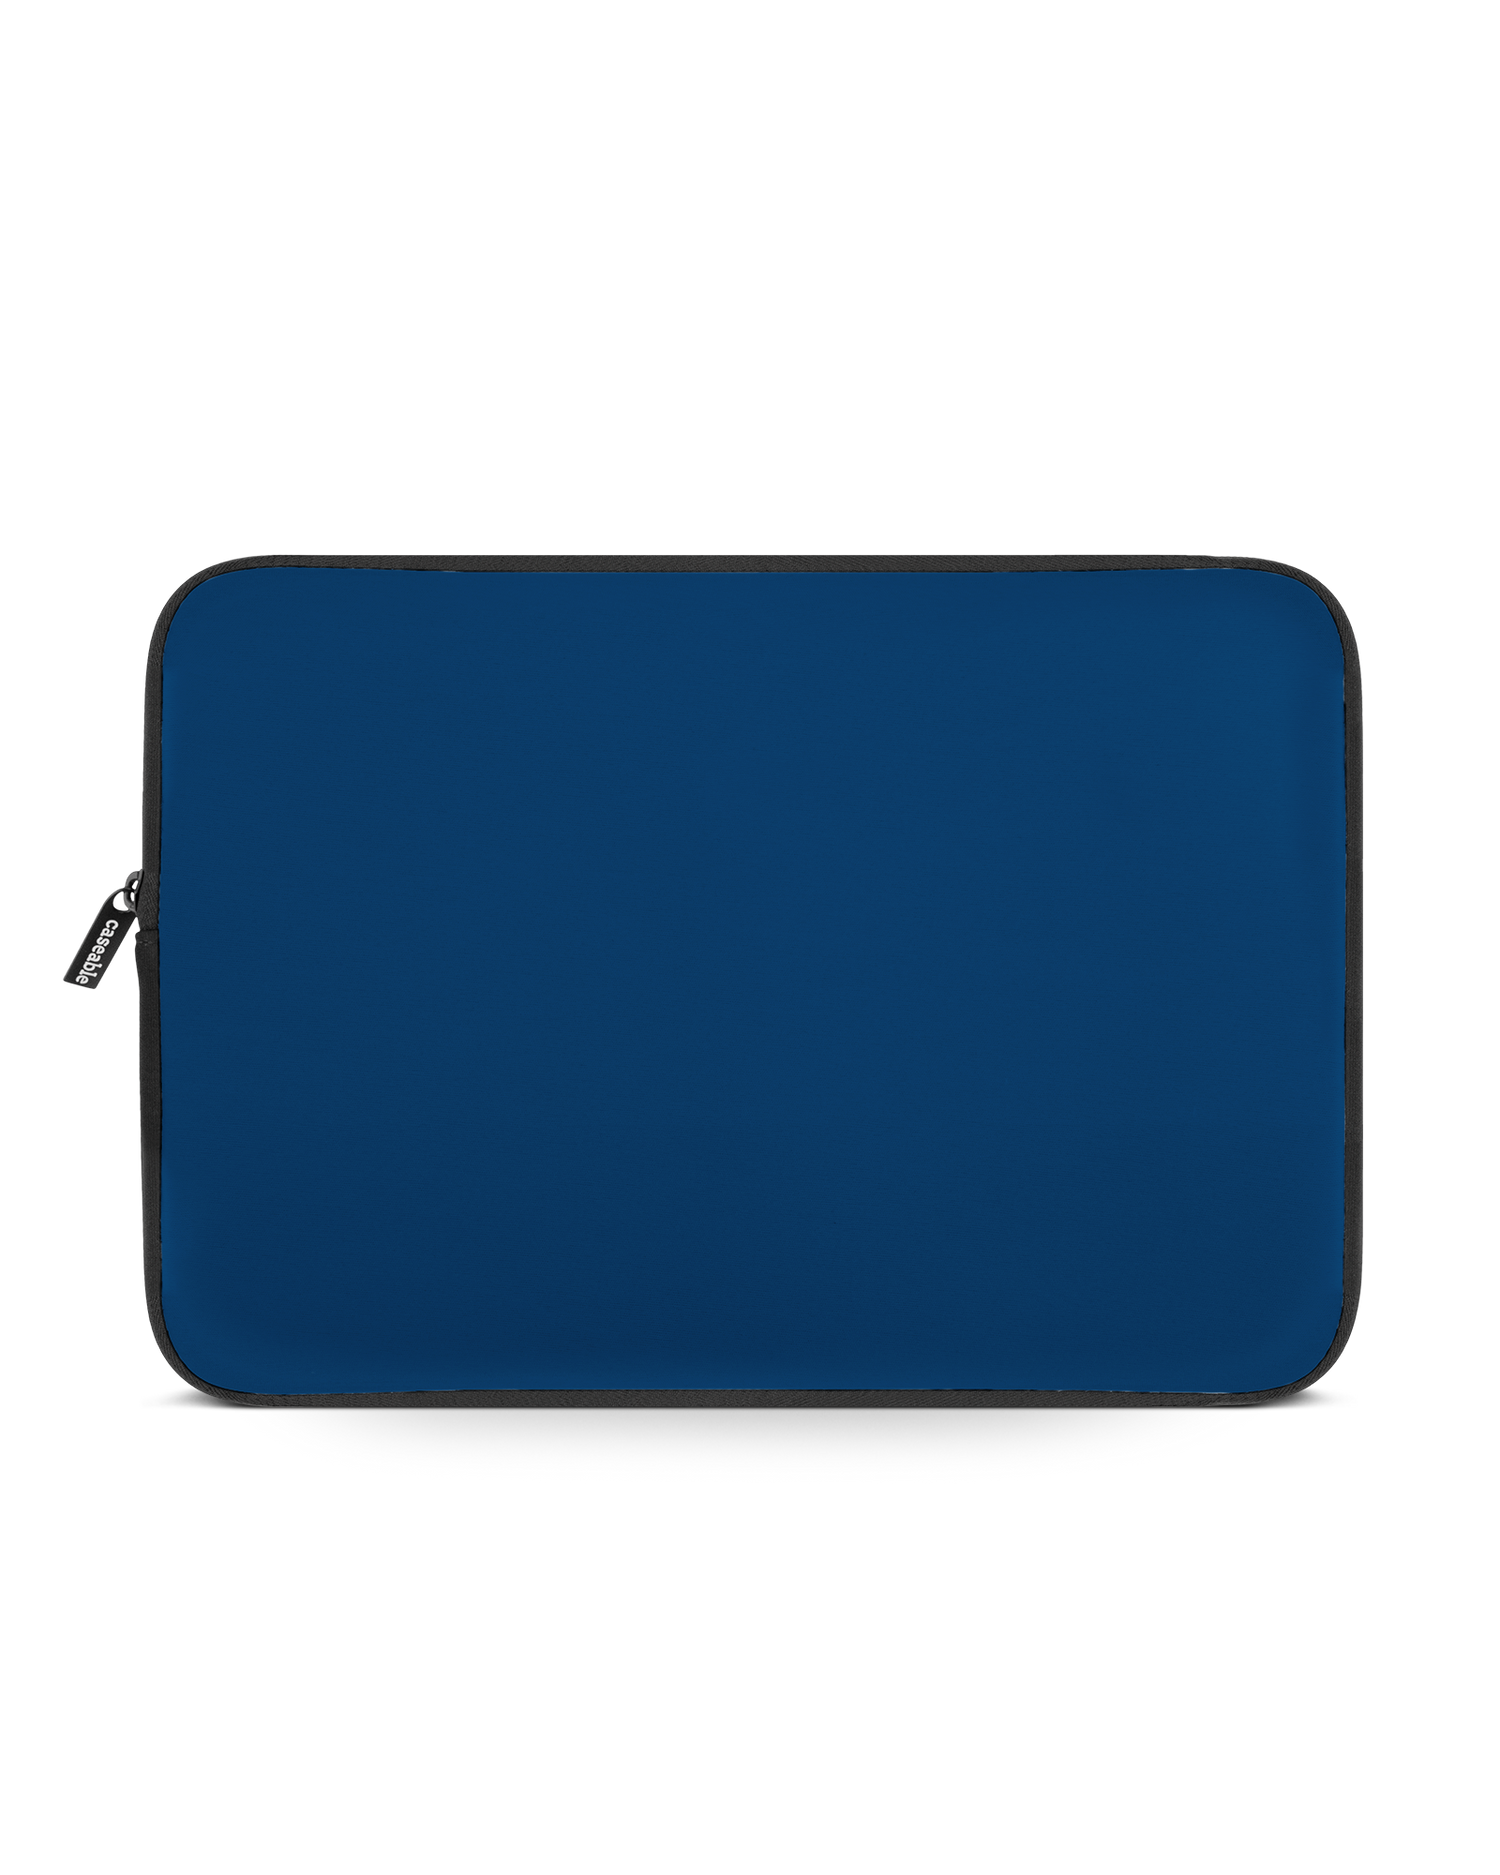 CLASSIC BLUE Laptop Case 14 inch: Front View